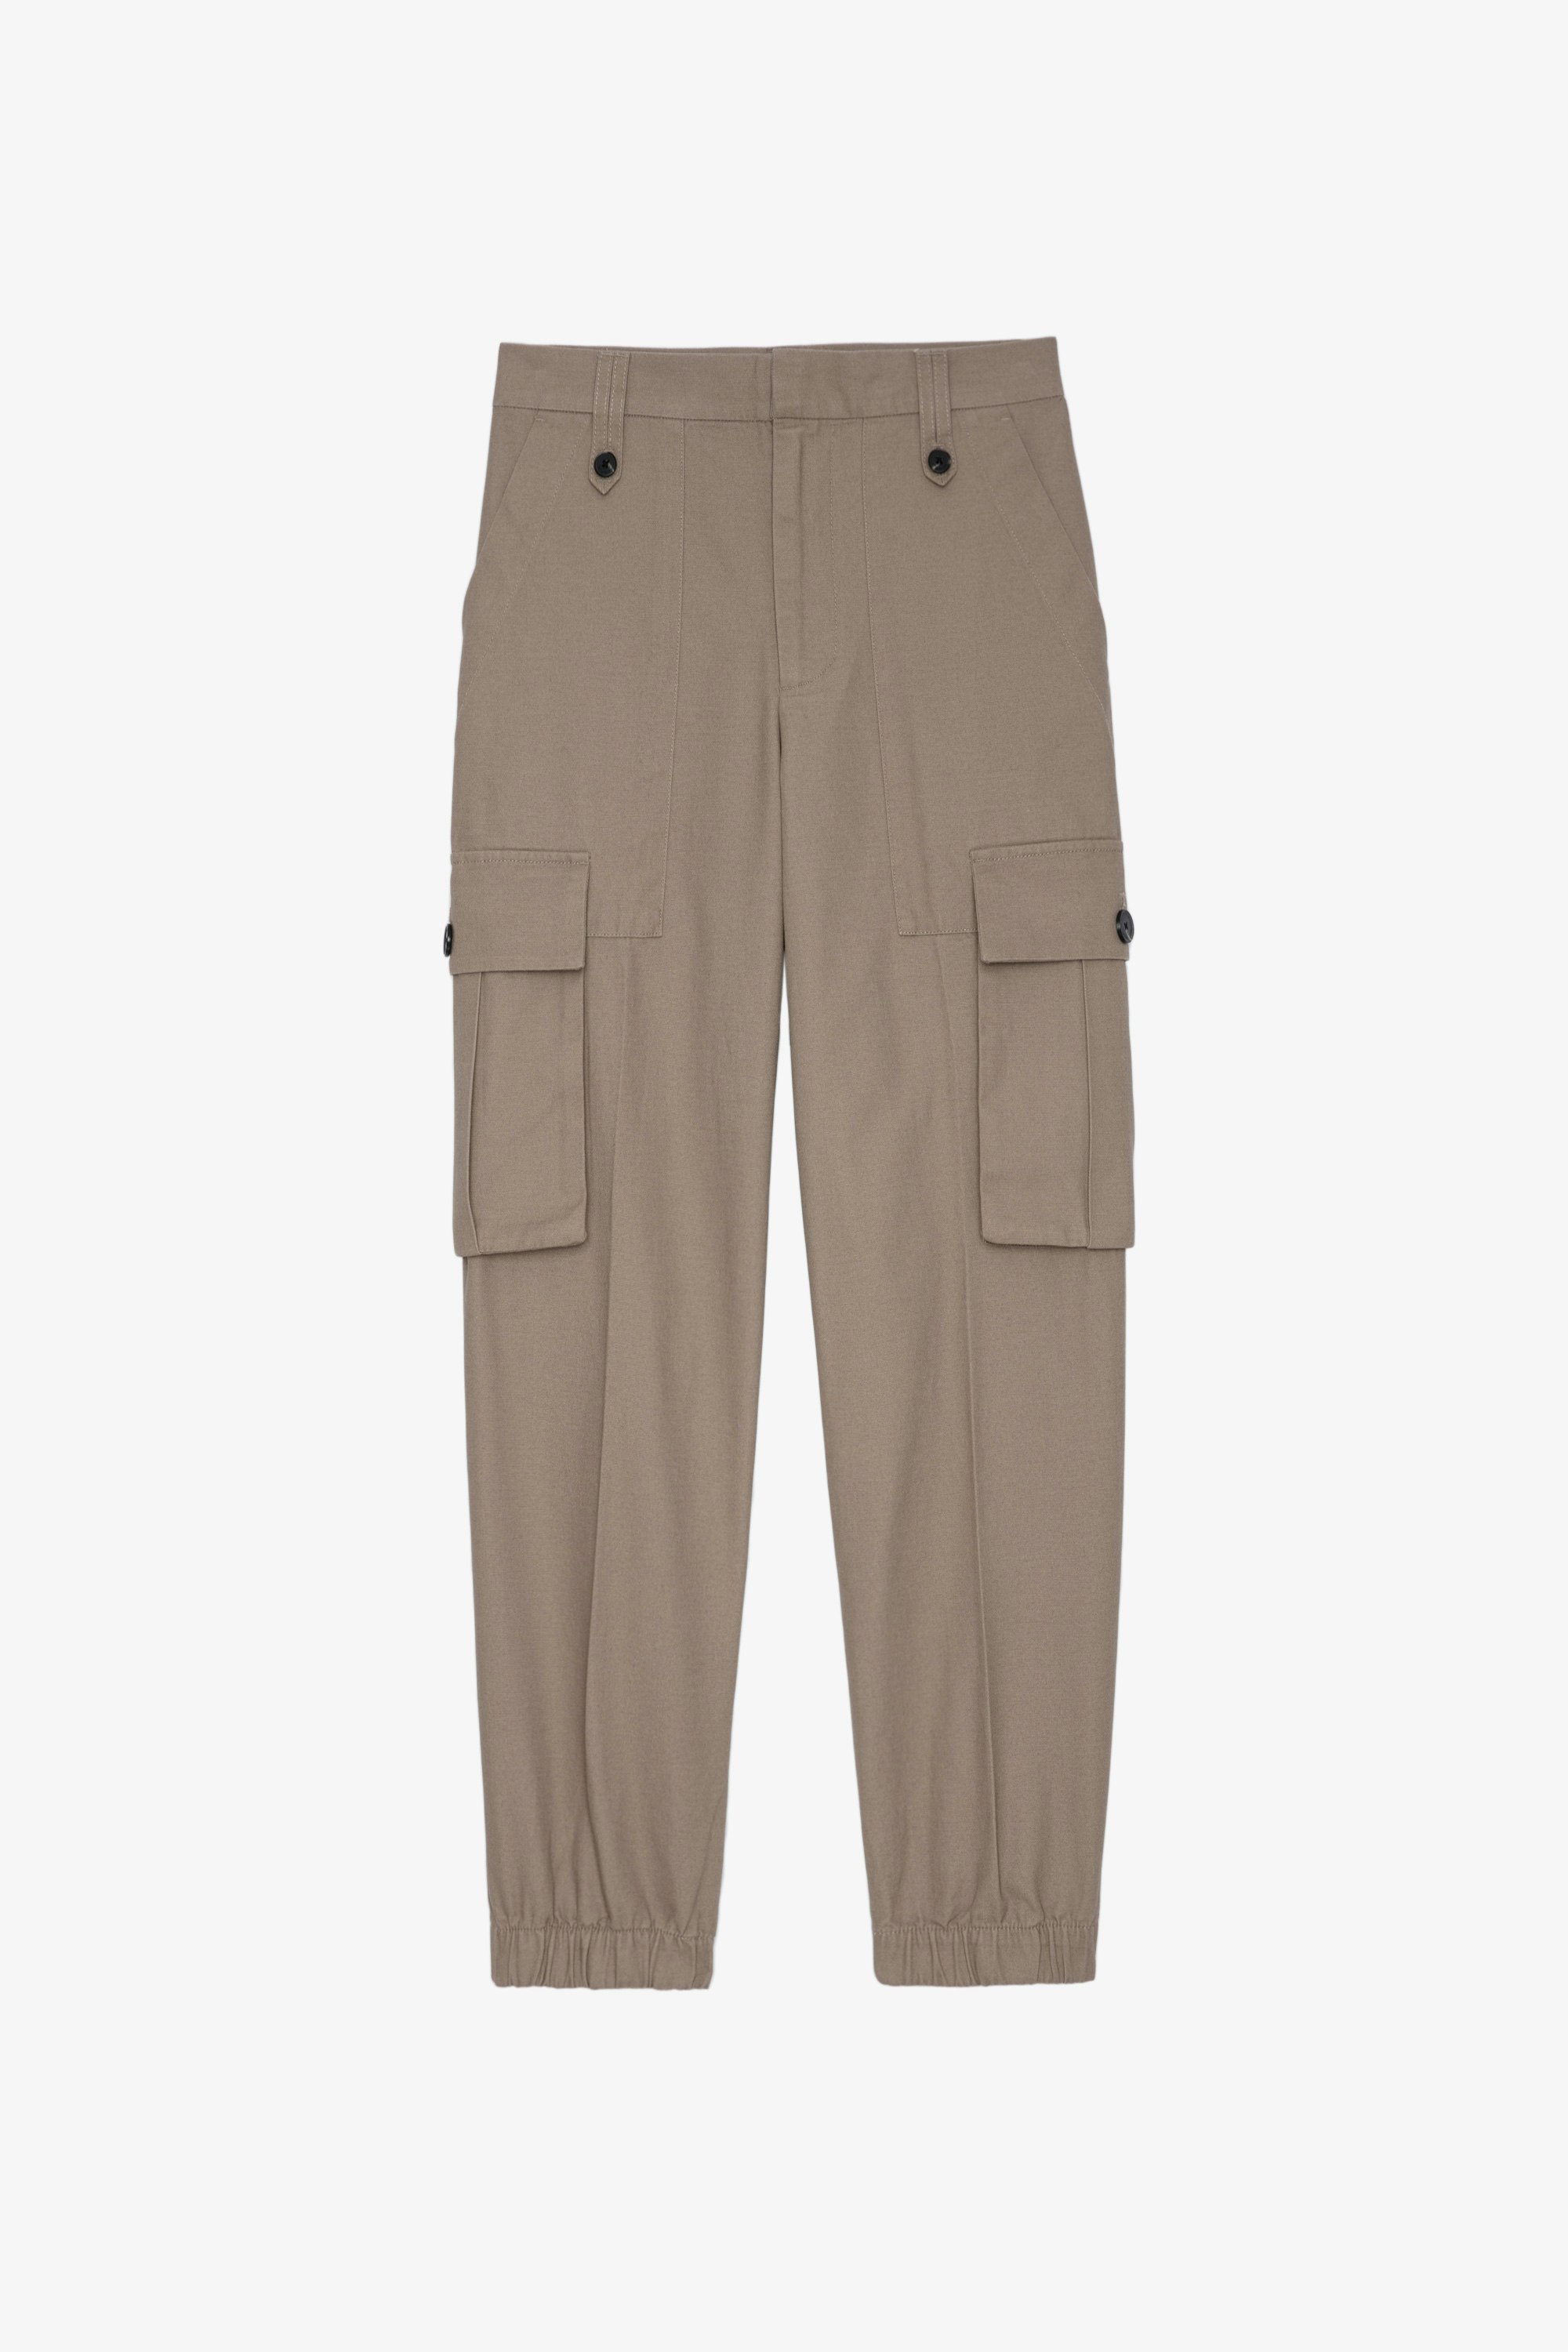 Pilote Canvas Trousers Women's cognac cotton trousers with cargo pockets